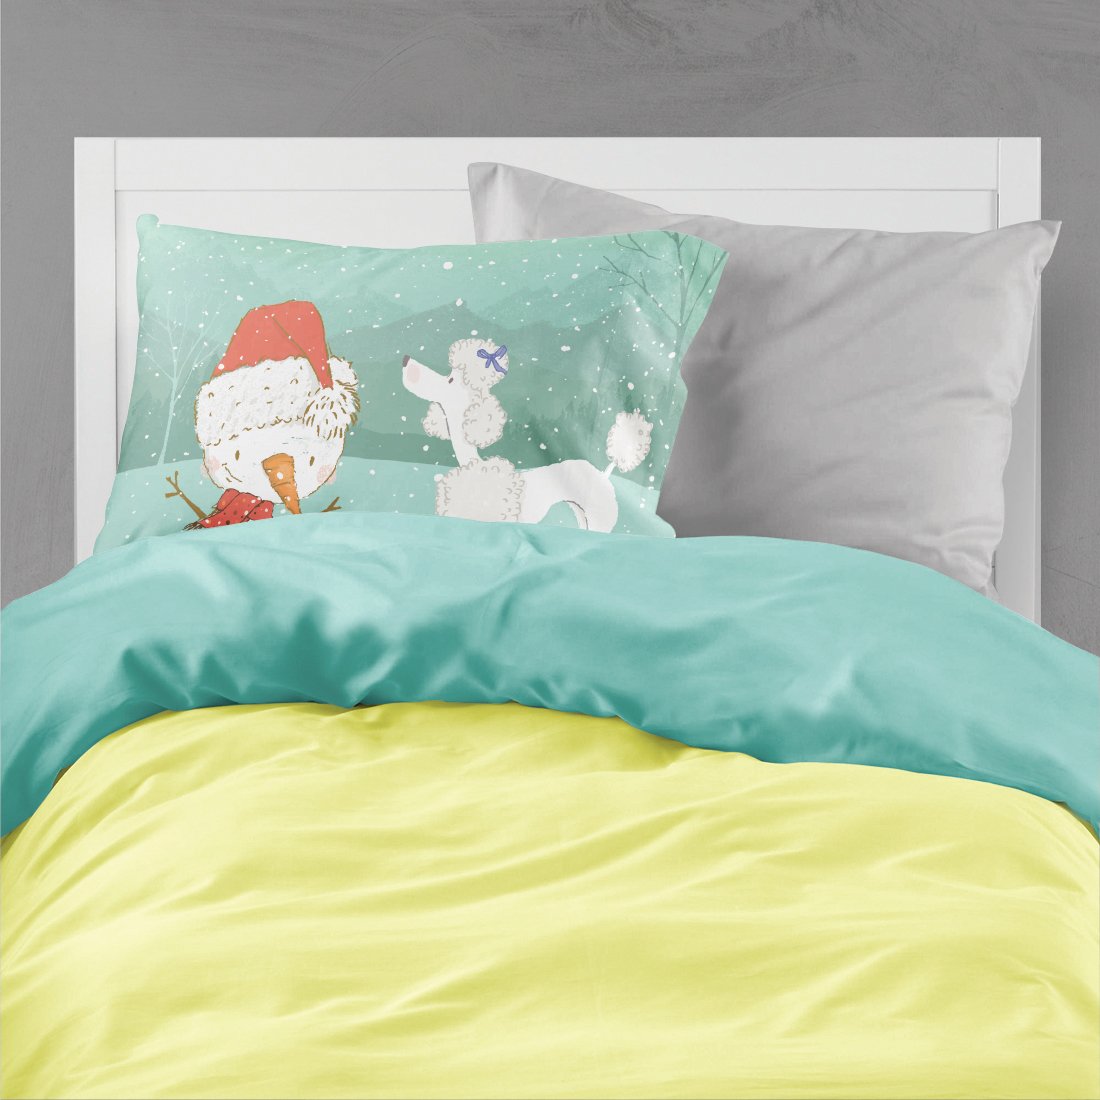 White Poodle Snowman Christmas Fabric Standard Pillowcase CK2067PILLOWCASE by Caroline's Treasures